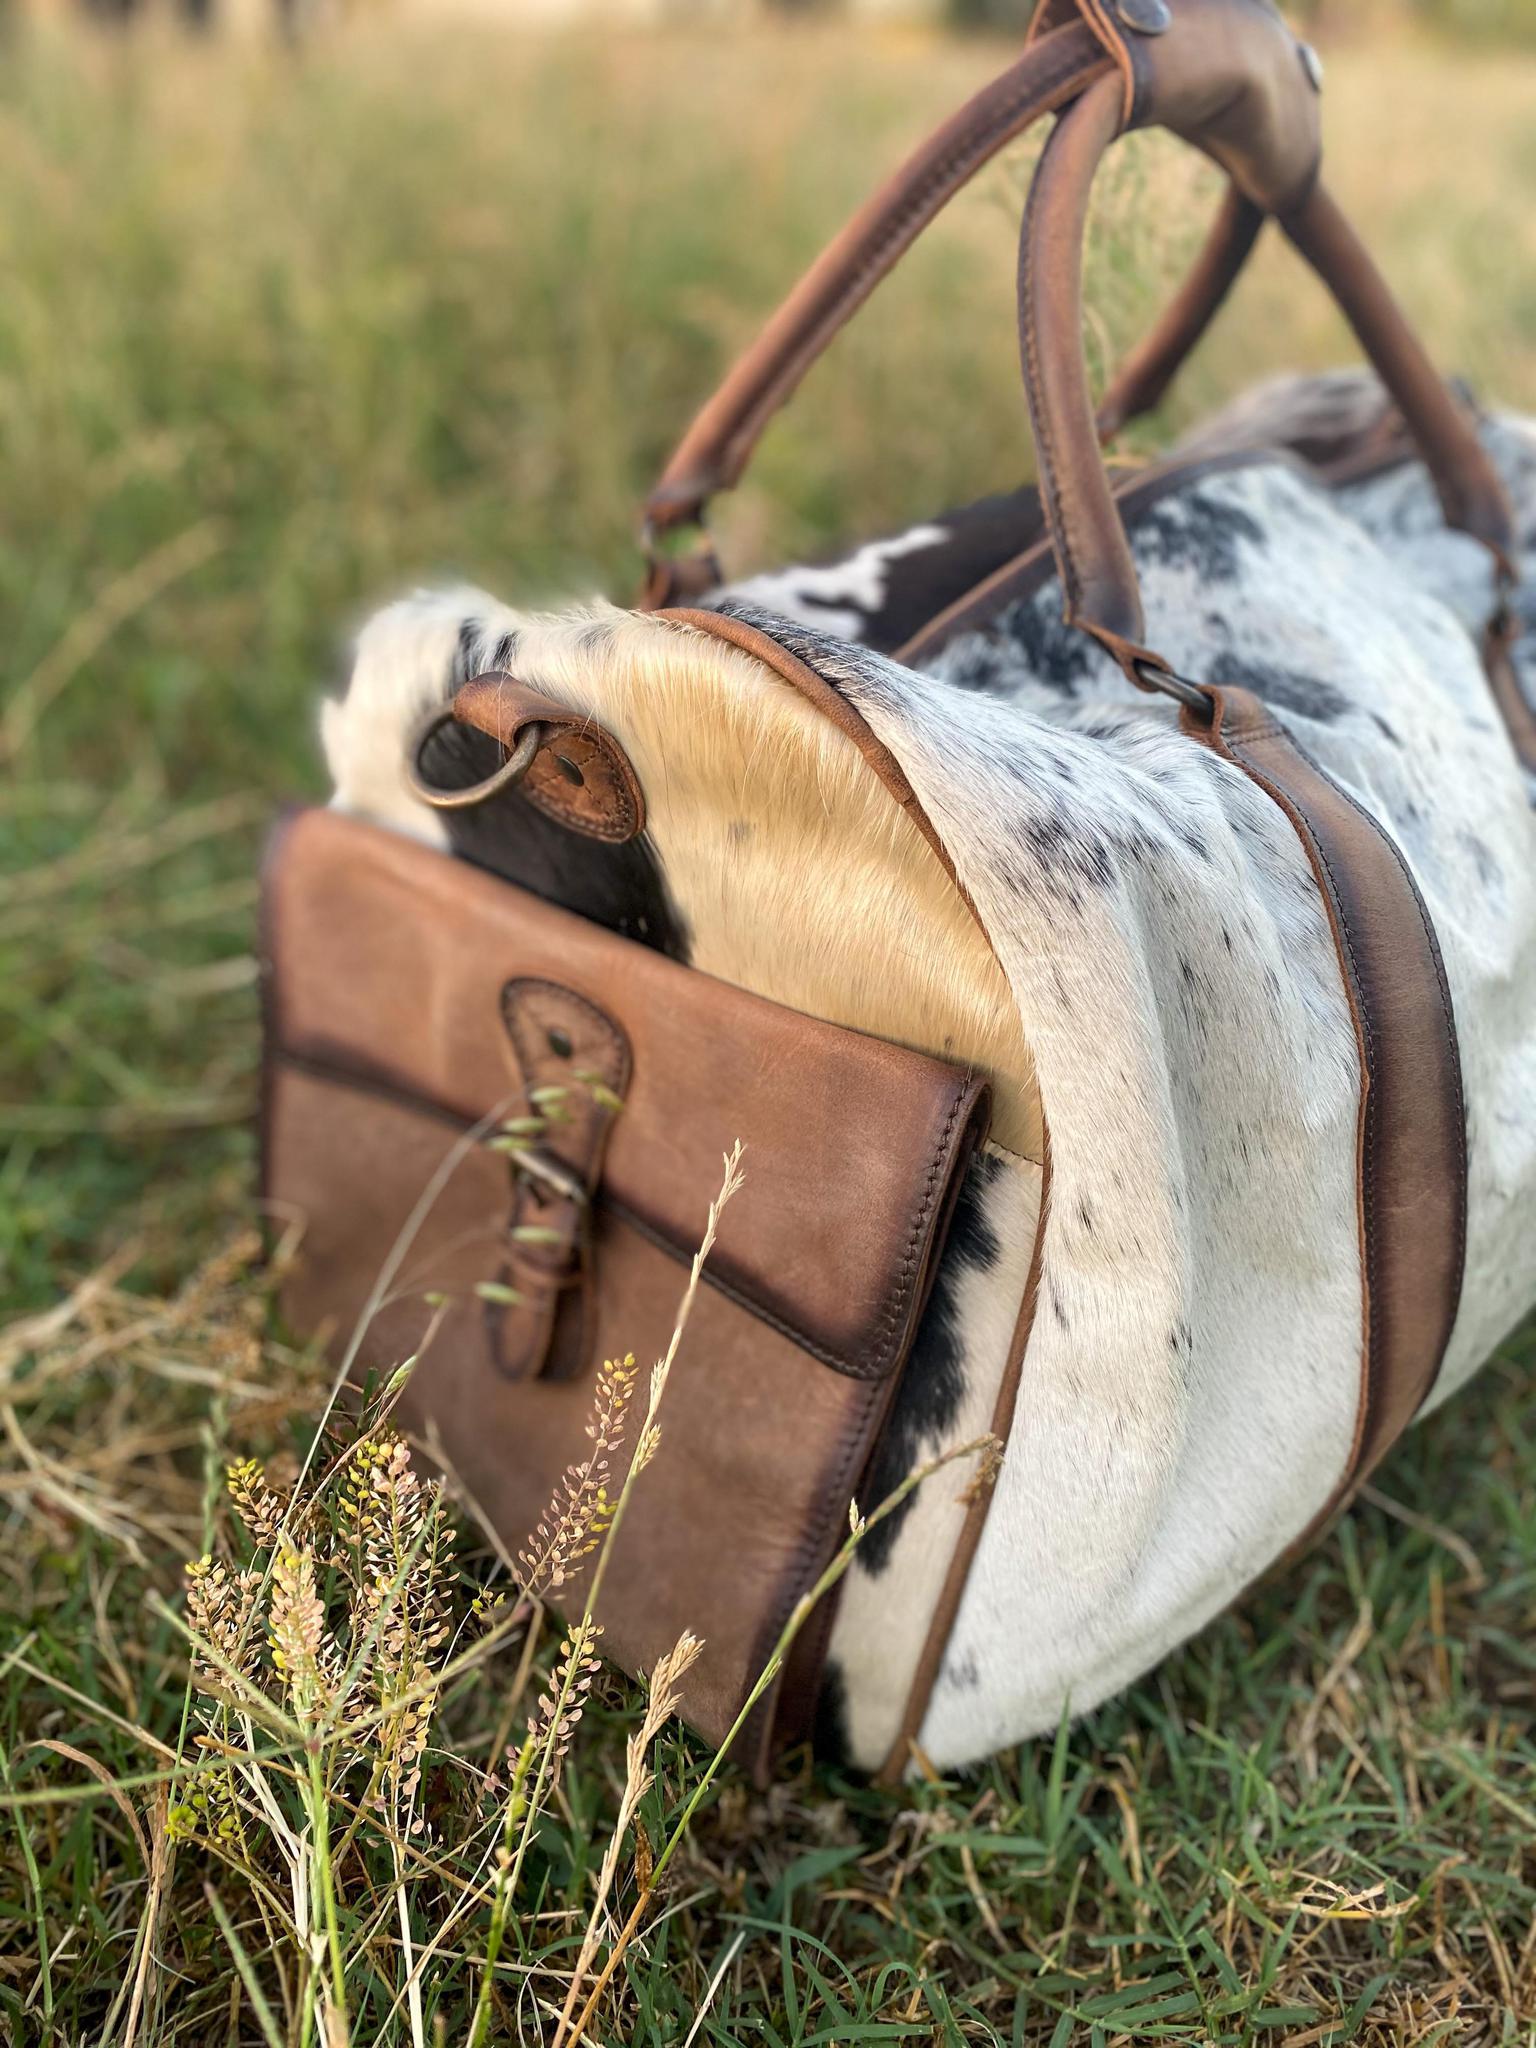 Brown Cowhide & Buckle Duffle Bag – The Cinchy Cowgirl